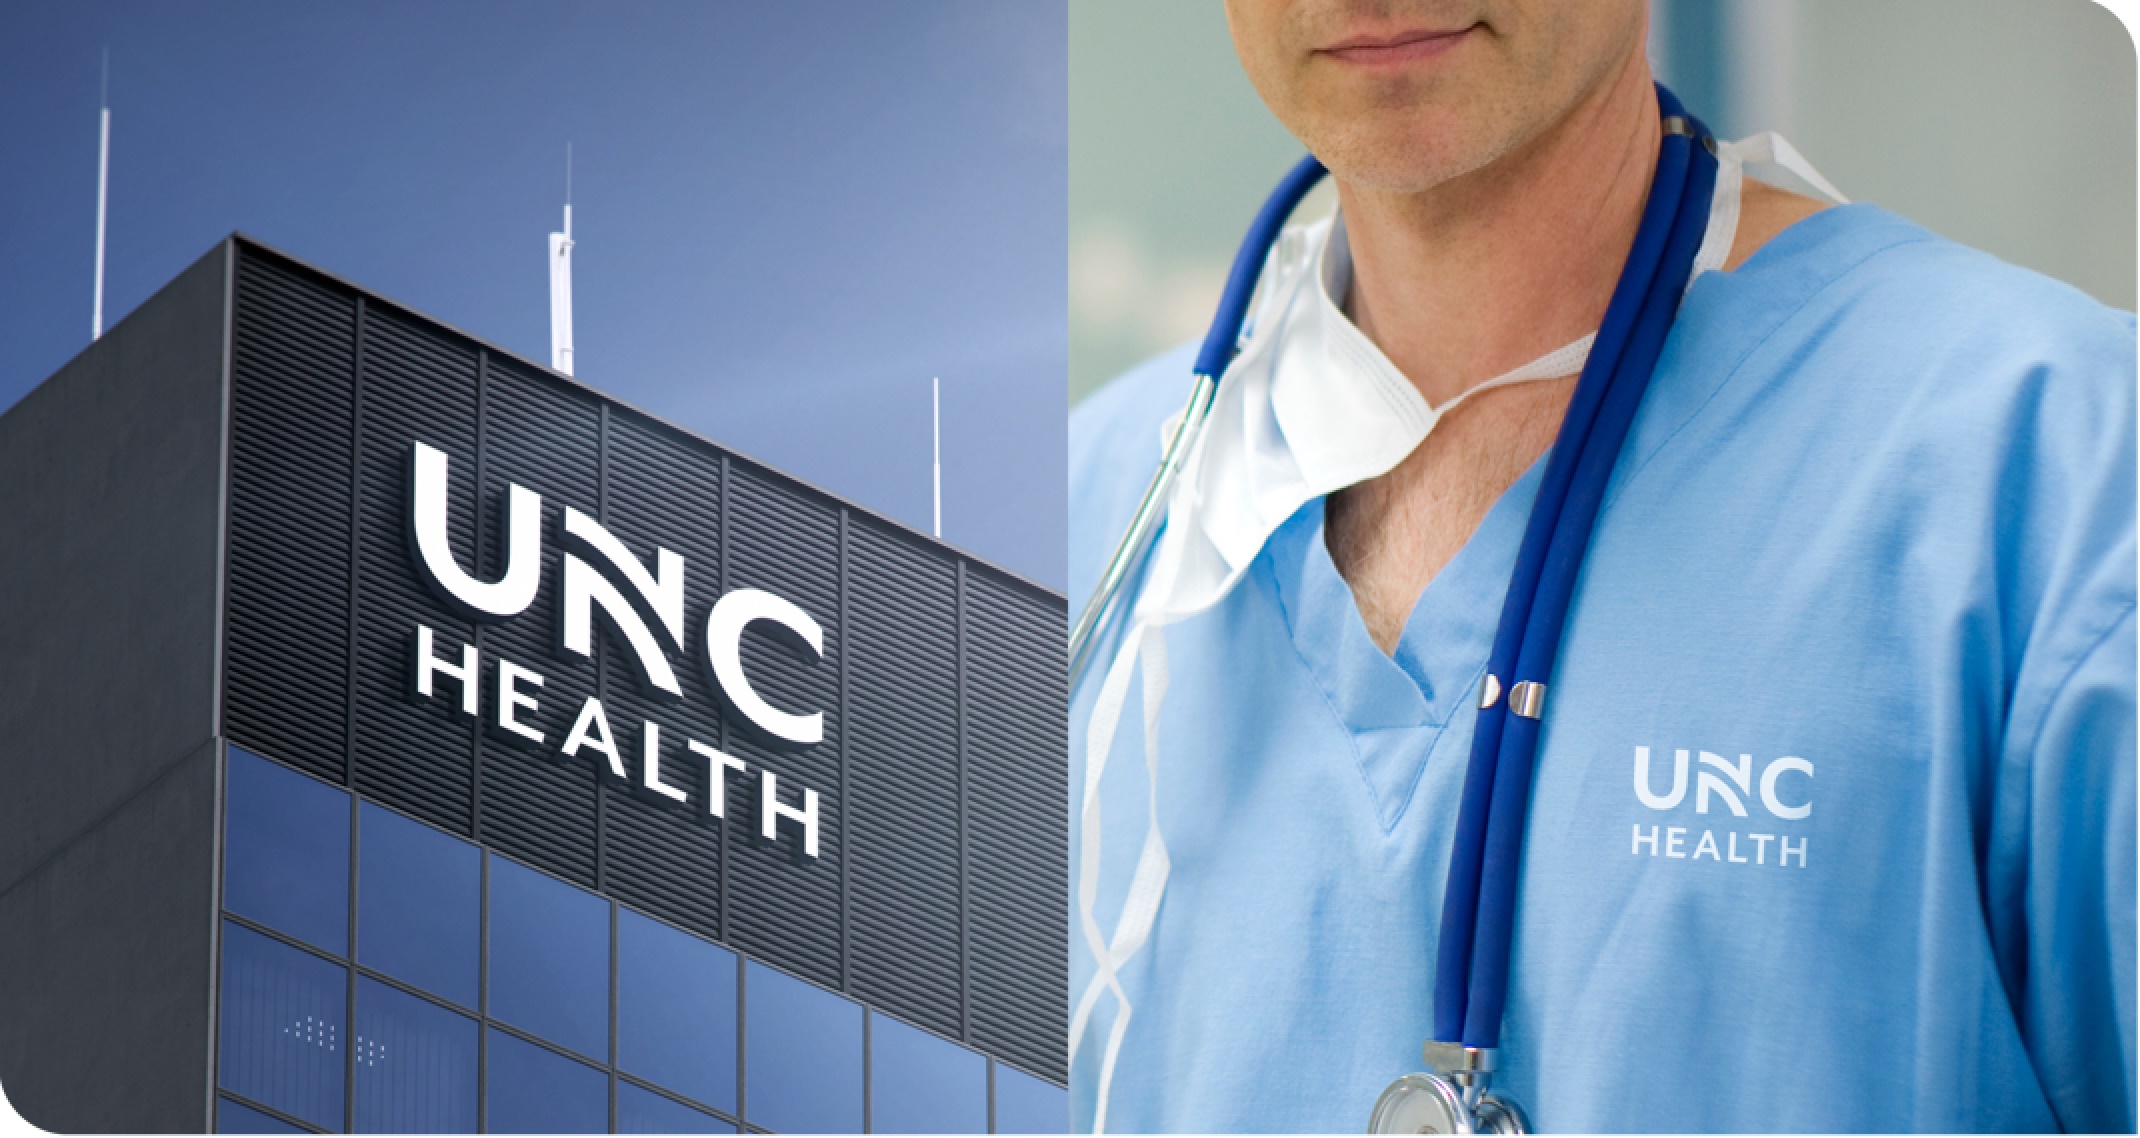 Unc Health Care Is Now “unc Health” Newsroom